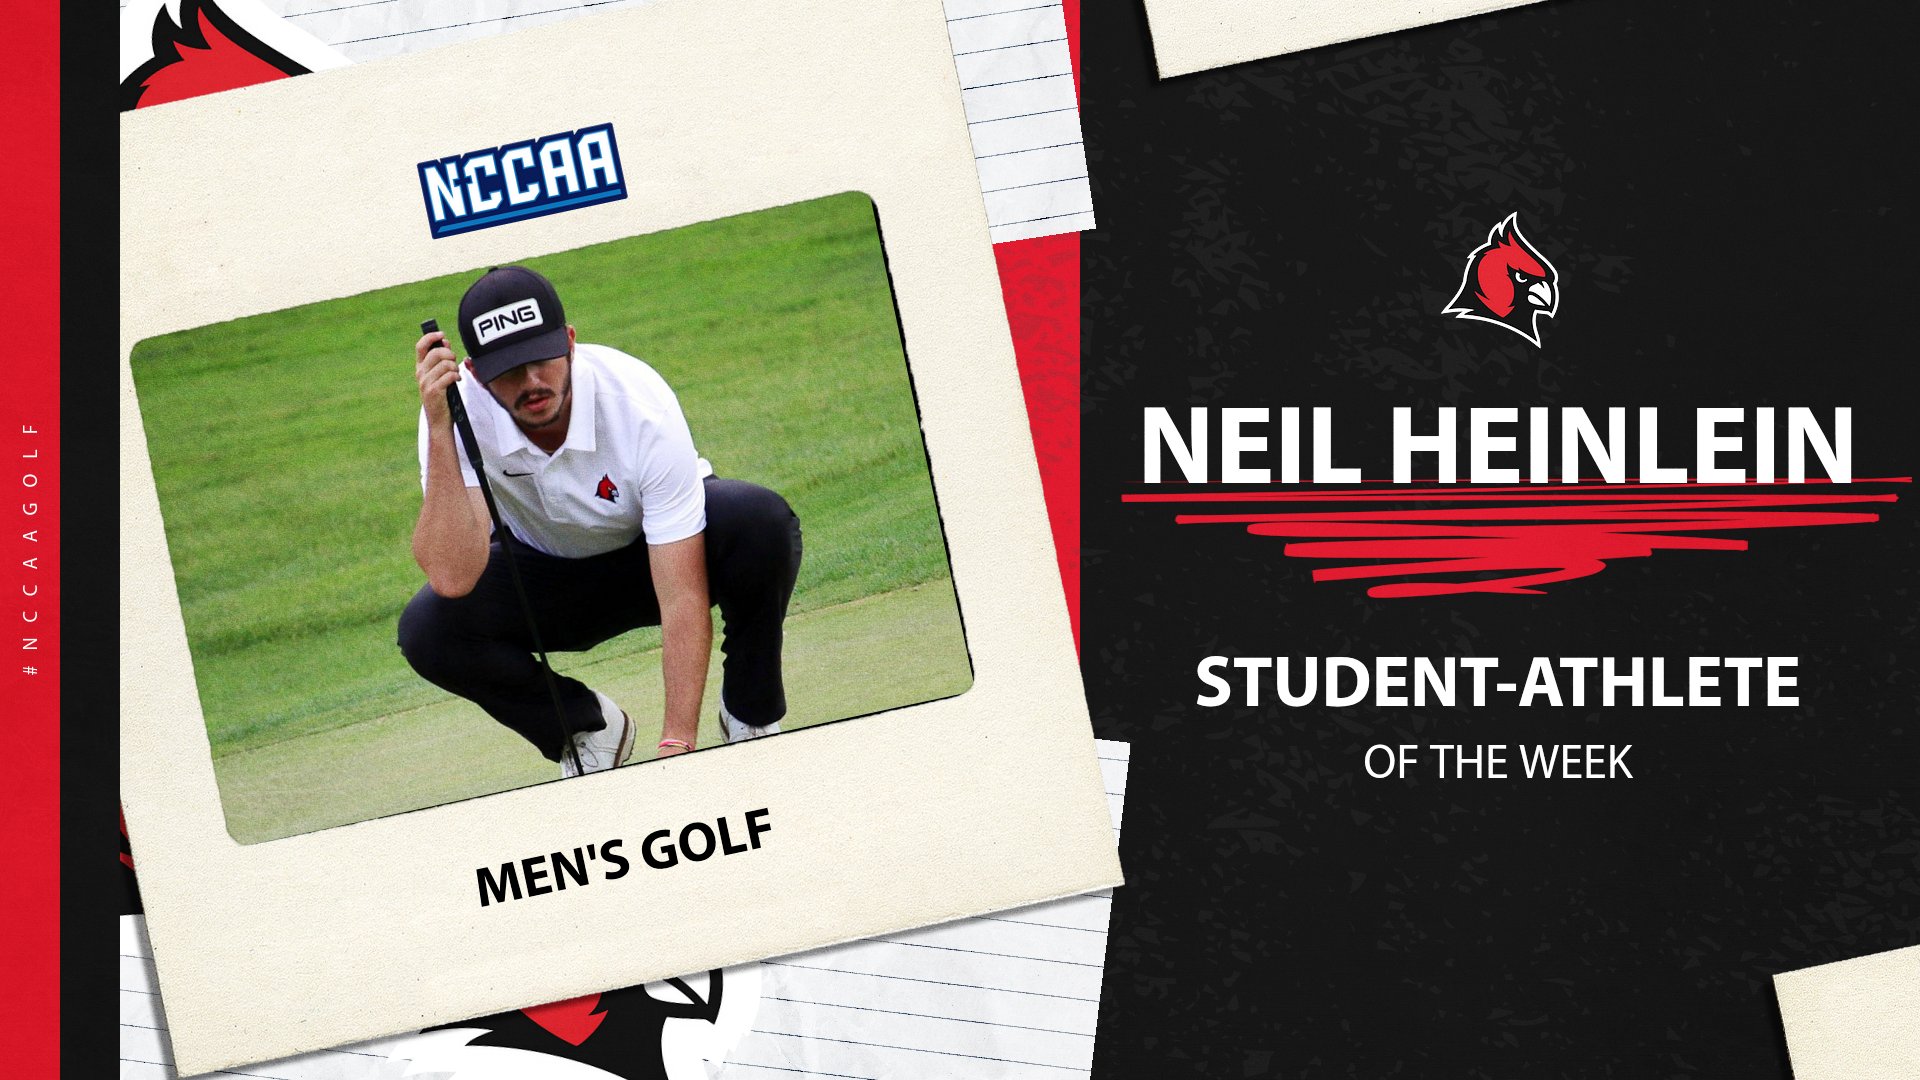 Neil Heinlein takes home NCCAA Golfer of the Week